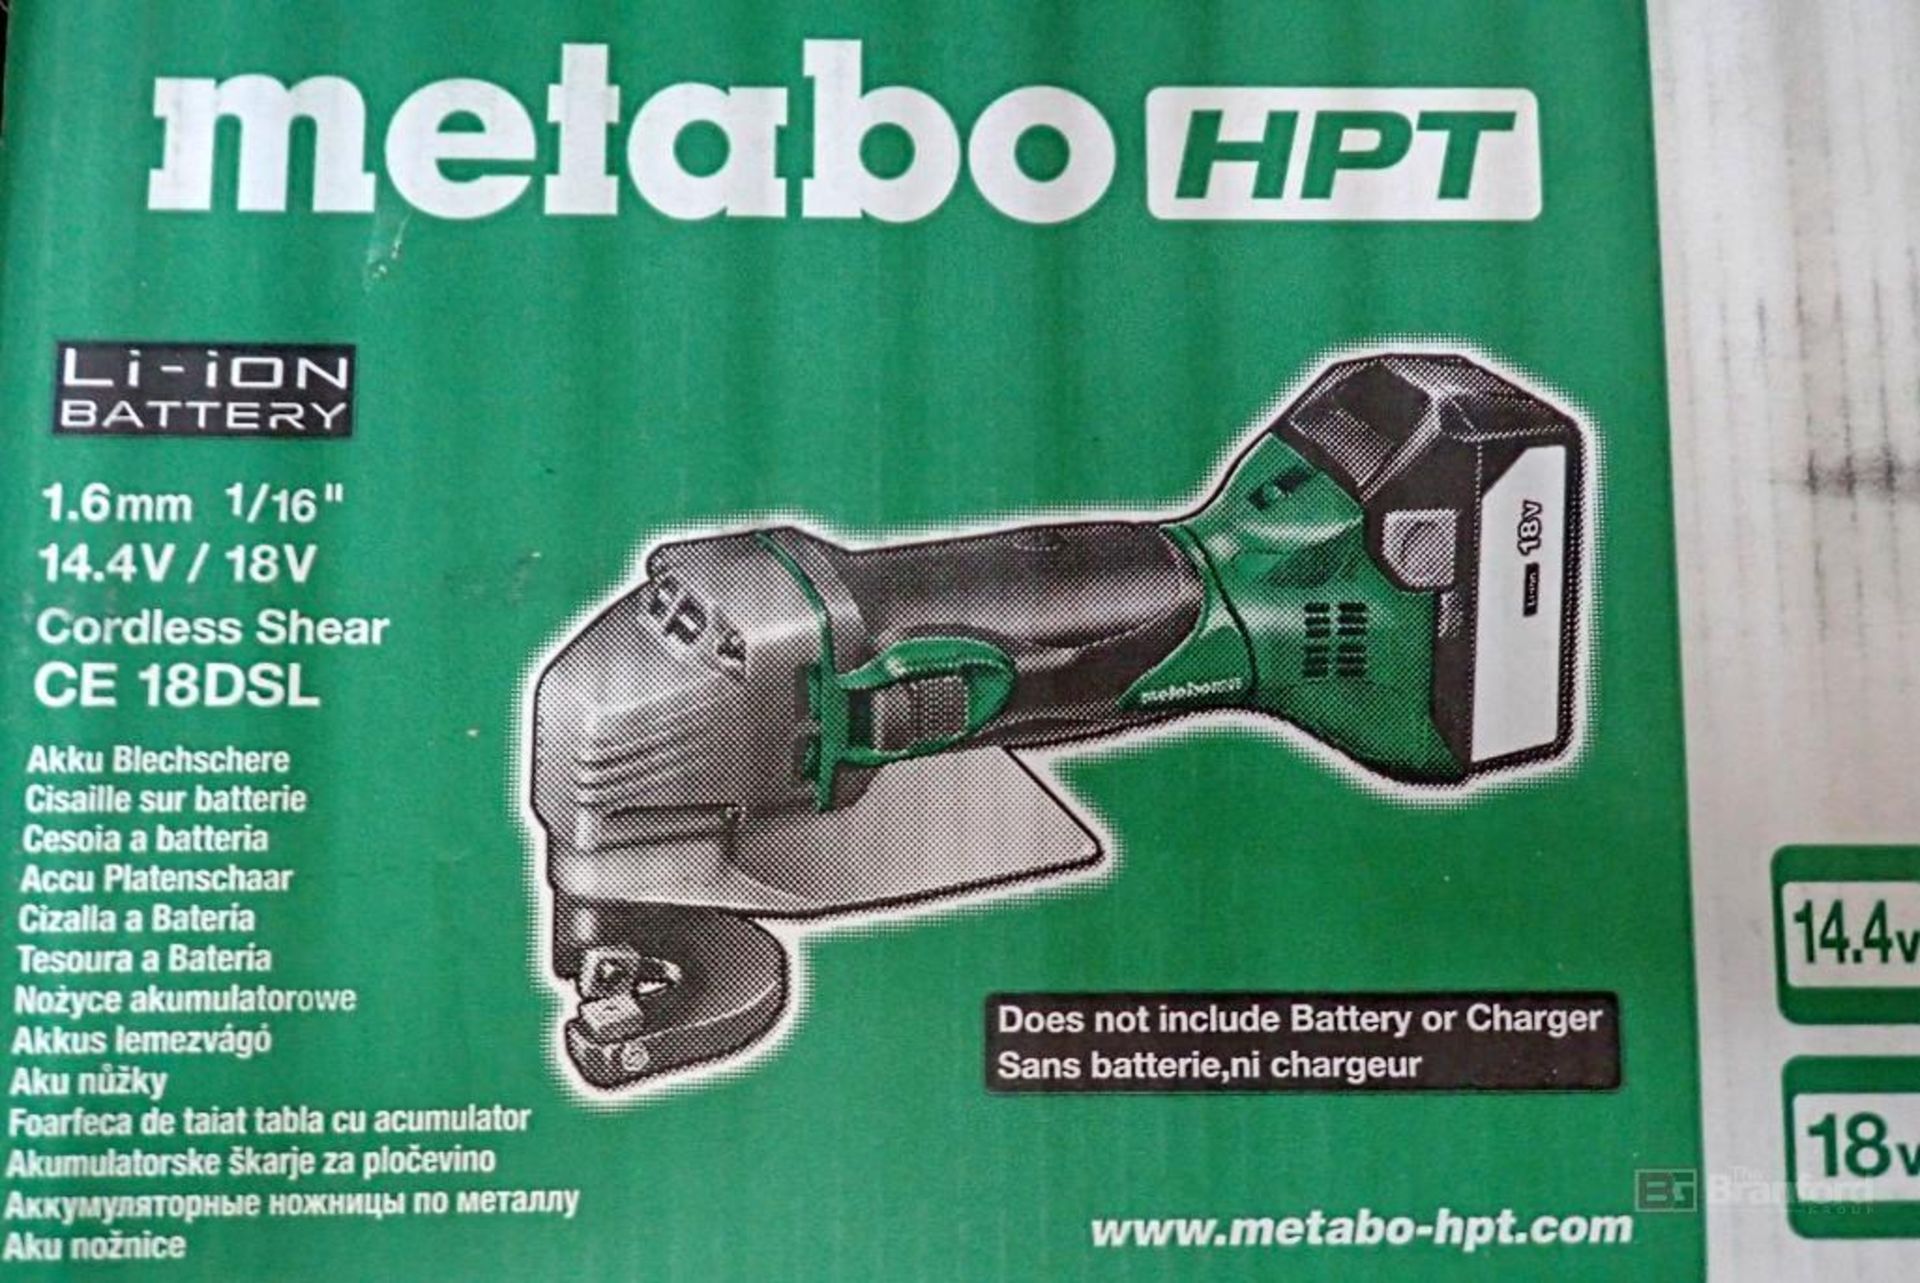 Metabo HPT CE 18DSL 1.6mm 1/16" Cordless Shear